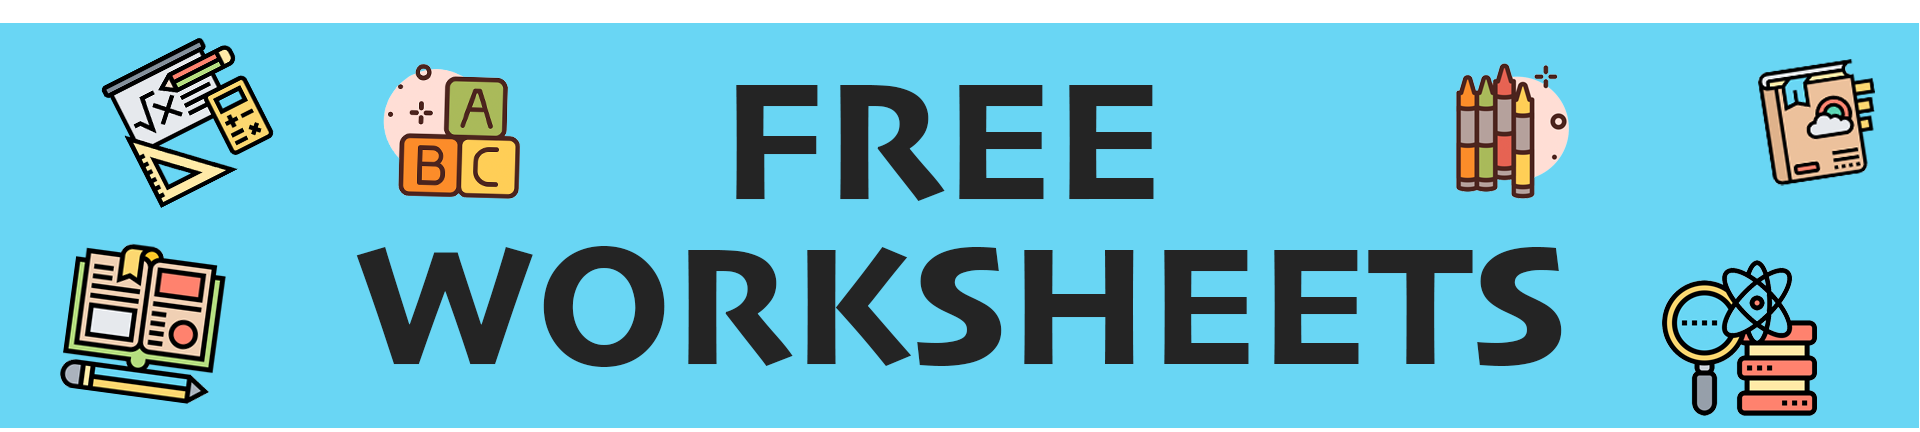 free worksheets for homeschoolers